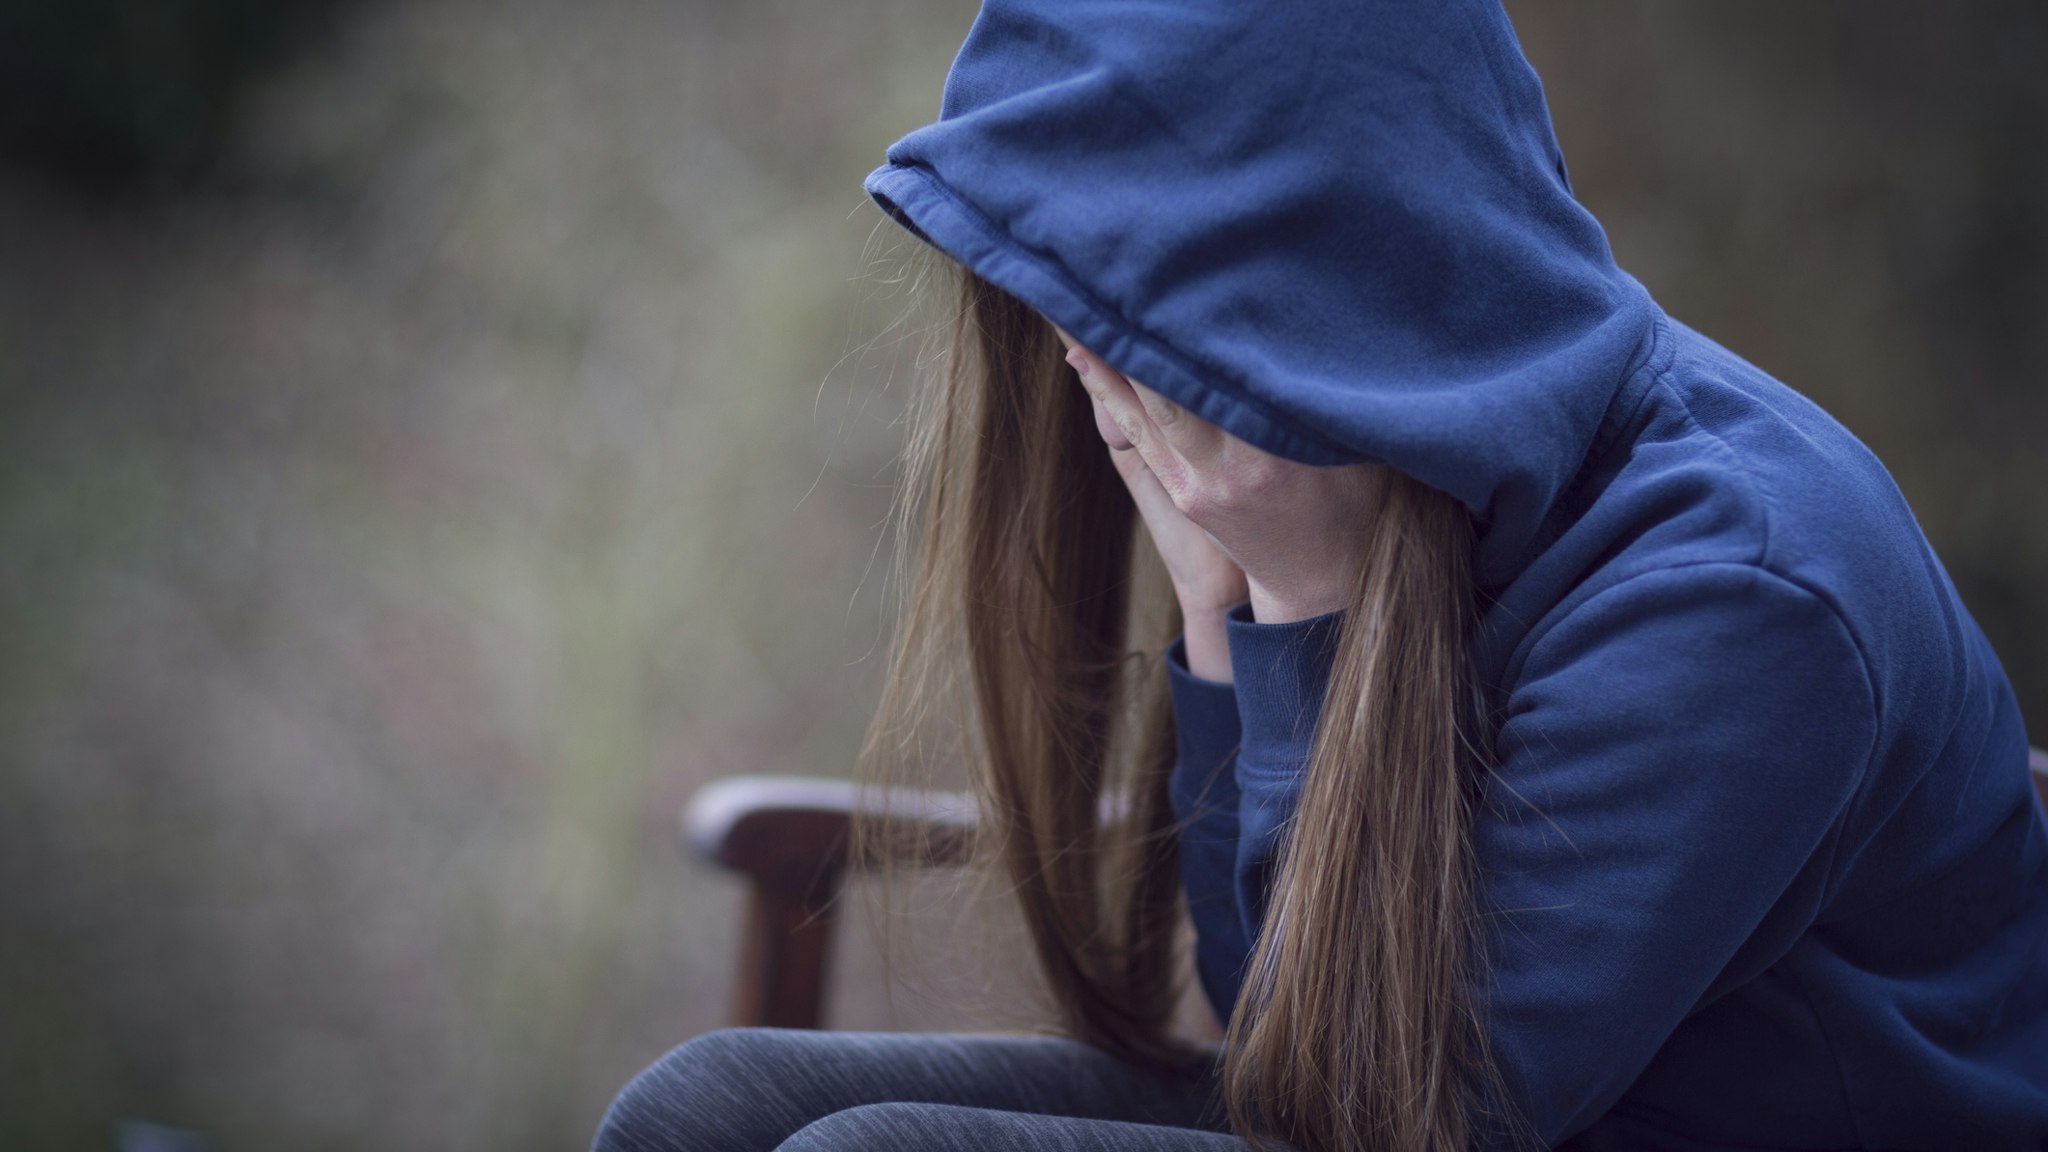 Teenage girl in hooded top, with head in hands in despair - stock photo